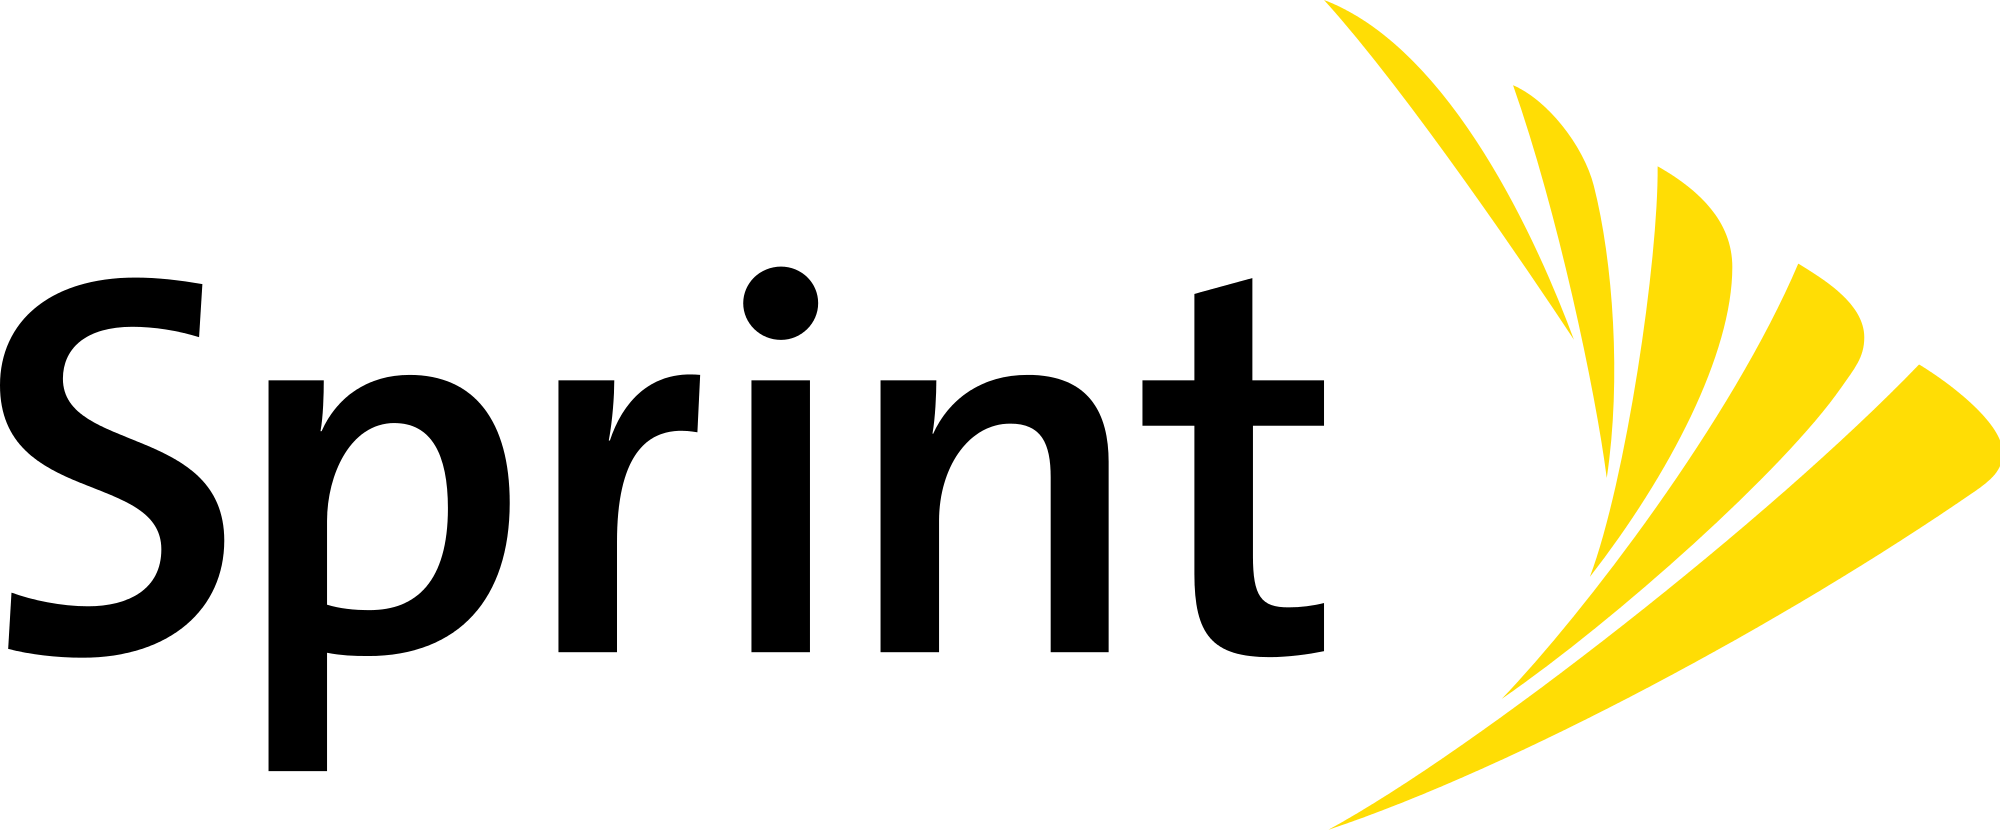 Sprint- Pre construction Services